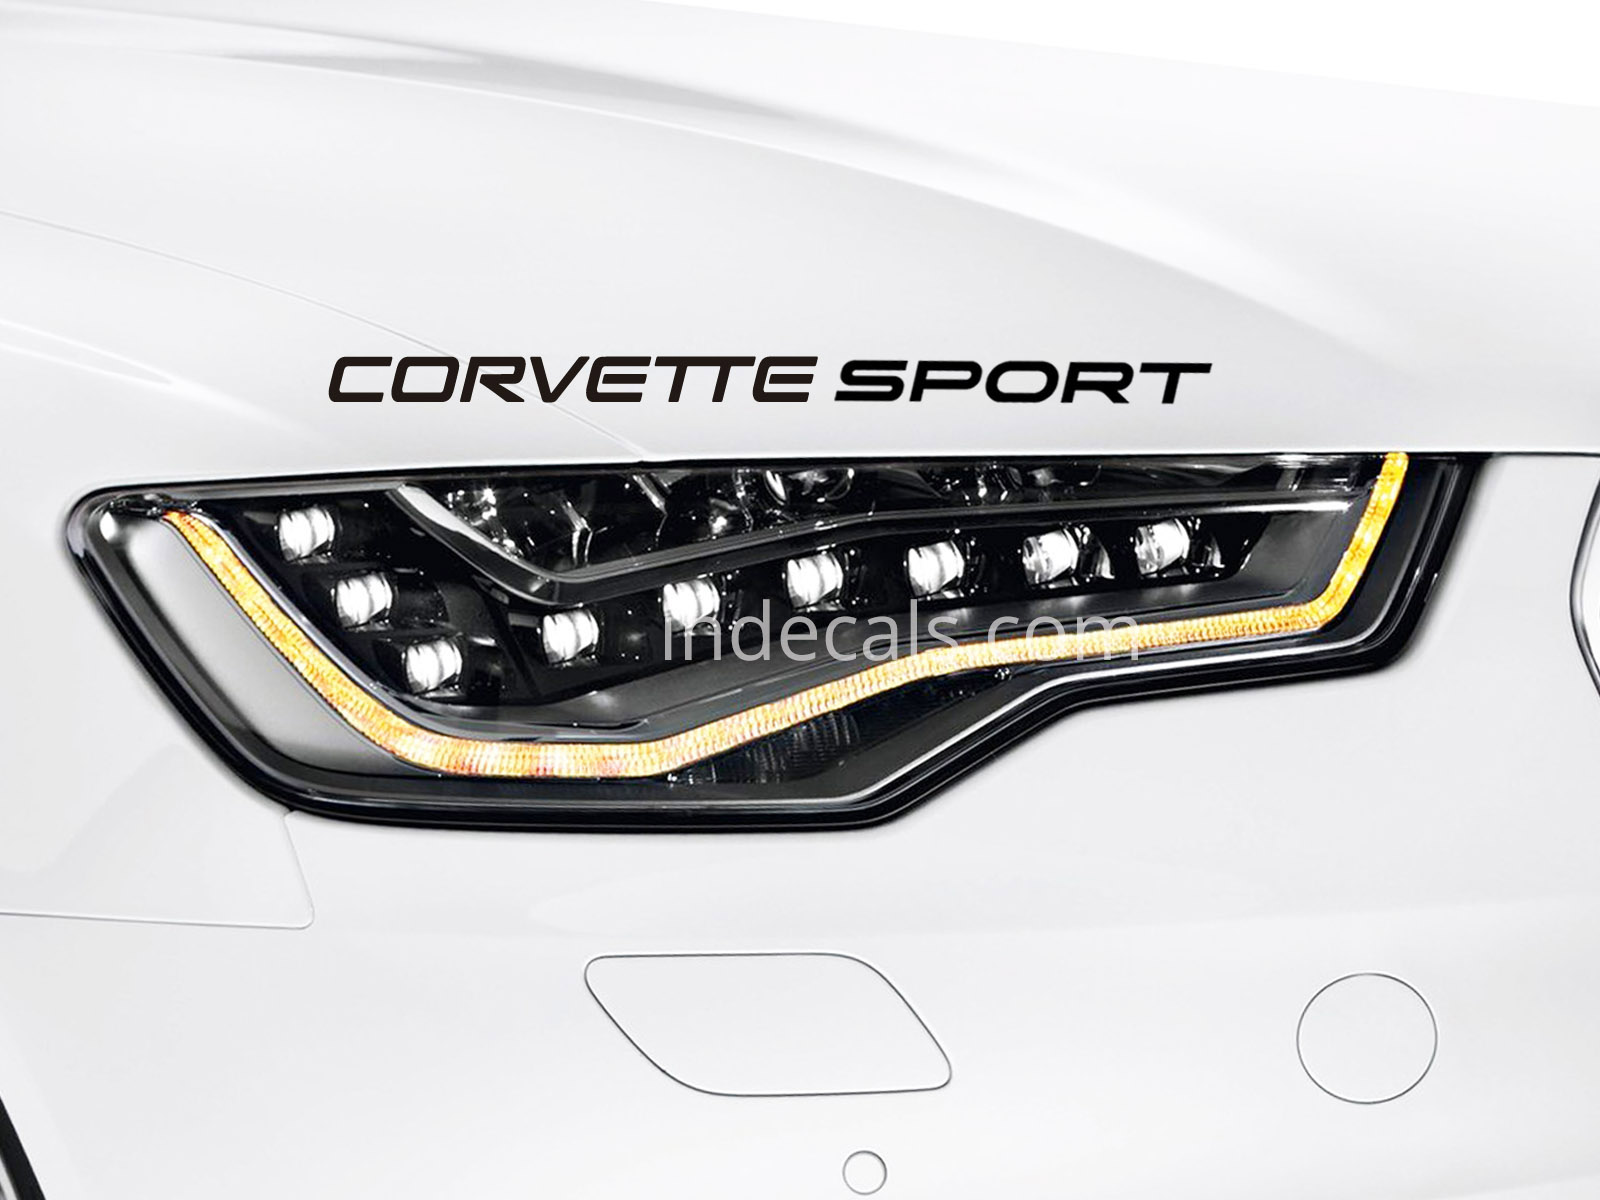 1 x Corvette Sport Sticker - Black